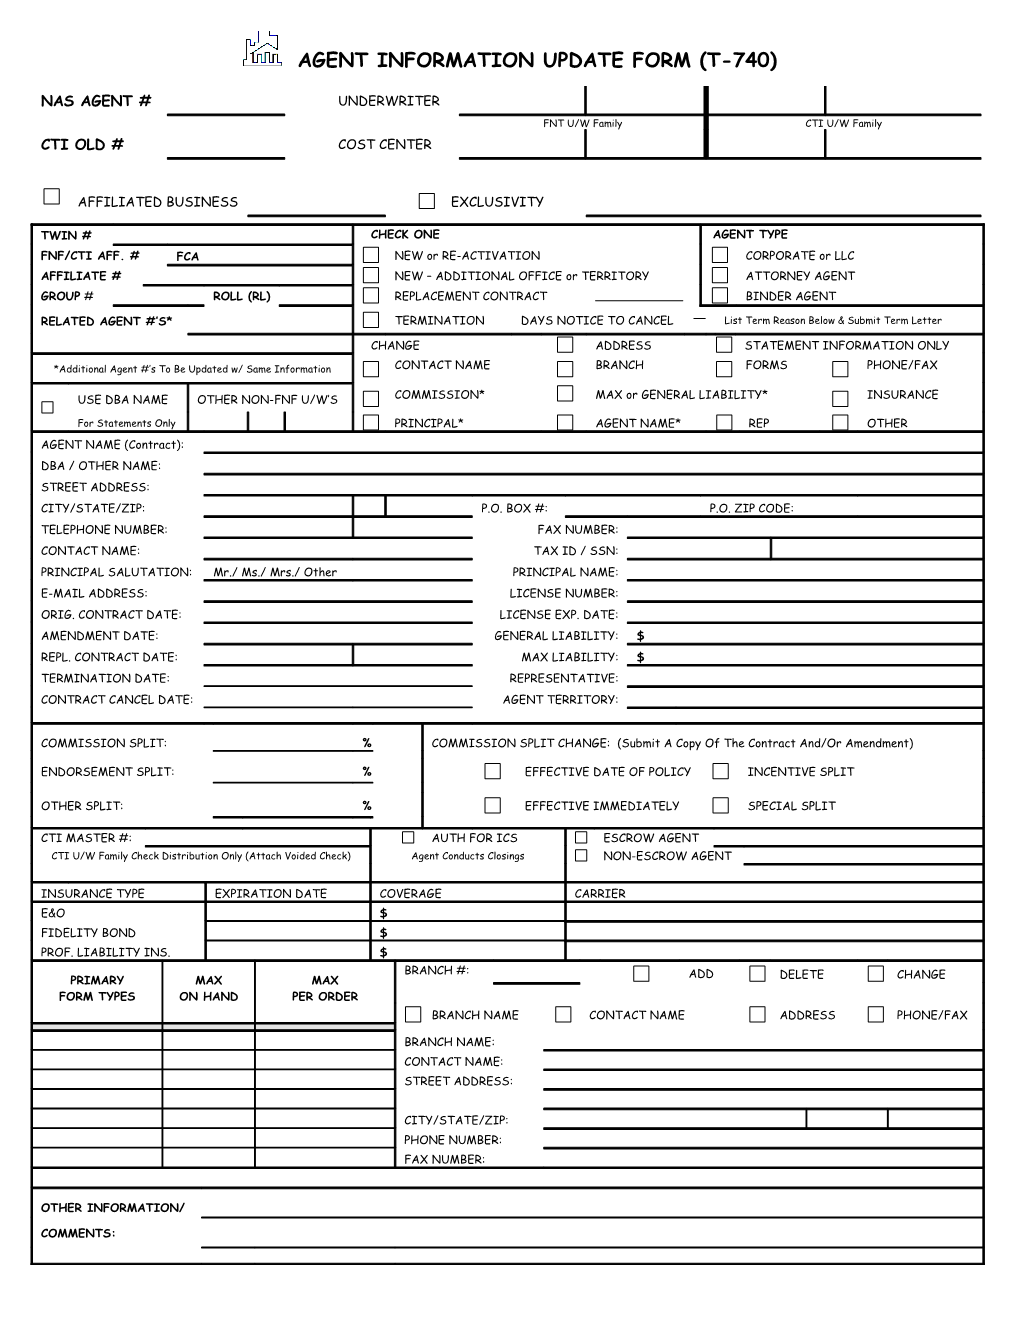 Agent Information Update Form (T-740)